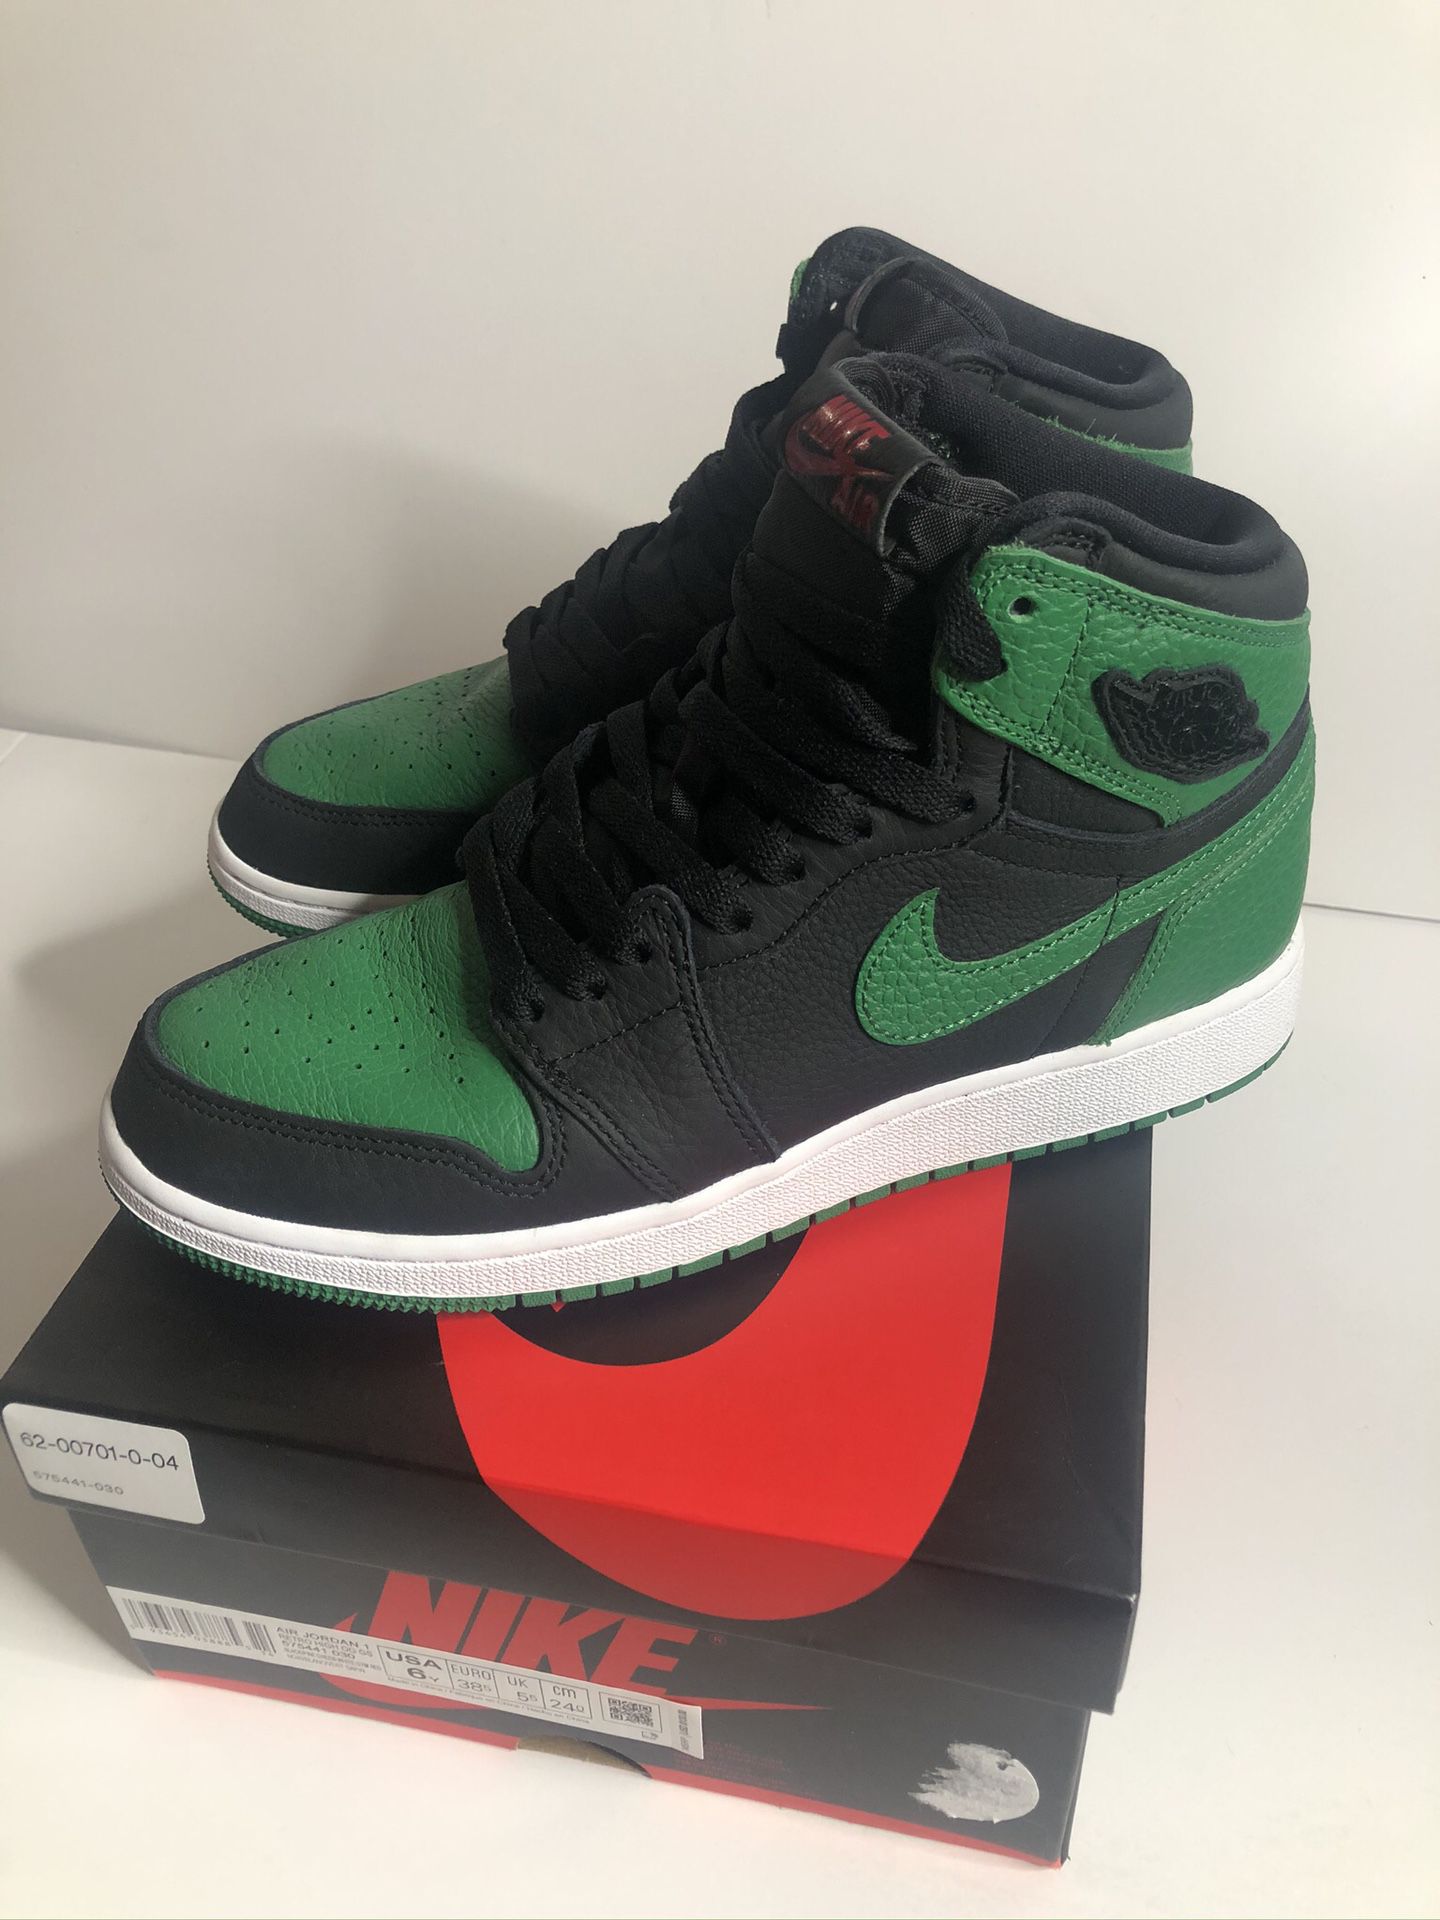 Nike air Jordan 1 pine green size 6 used